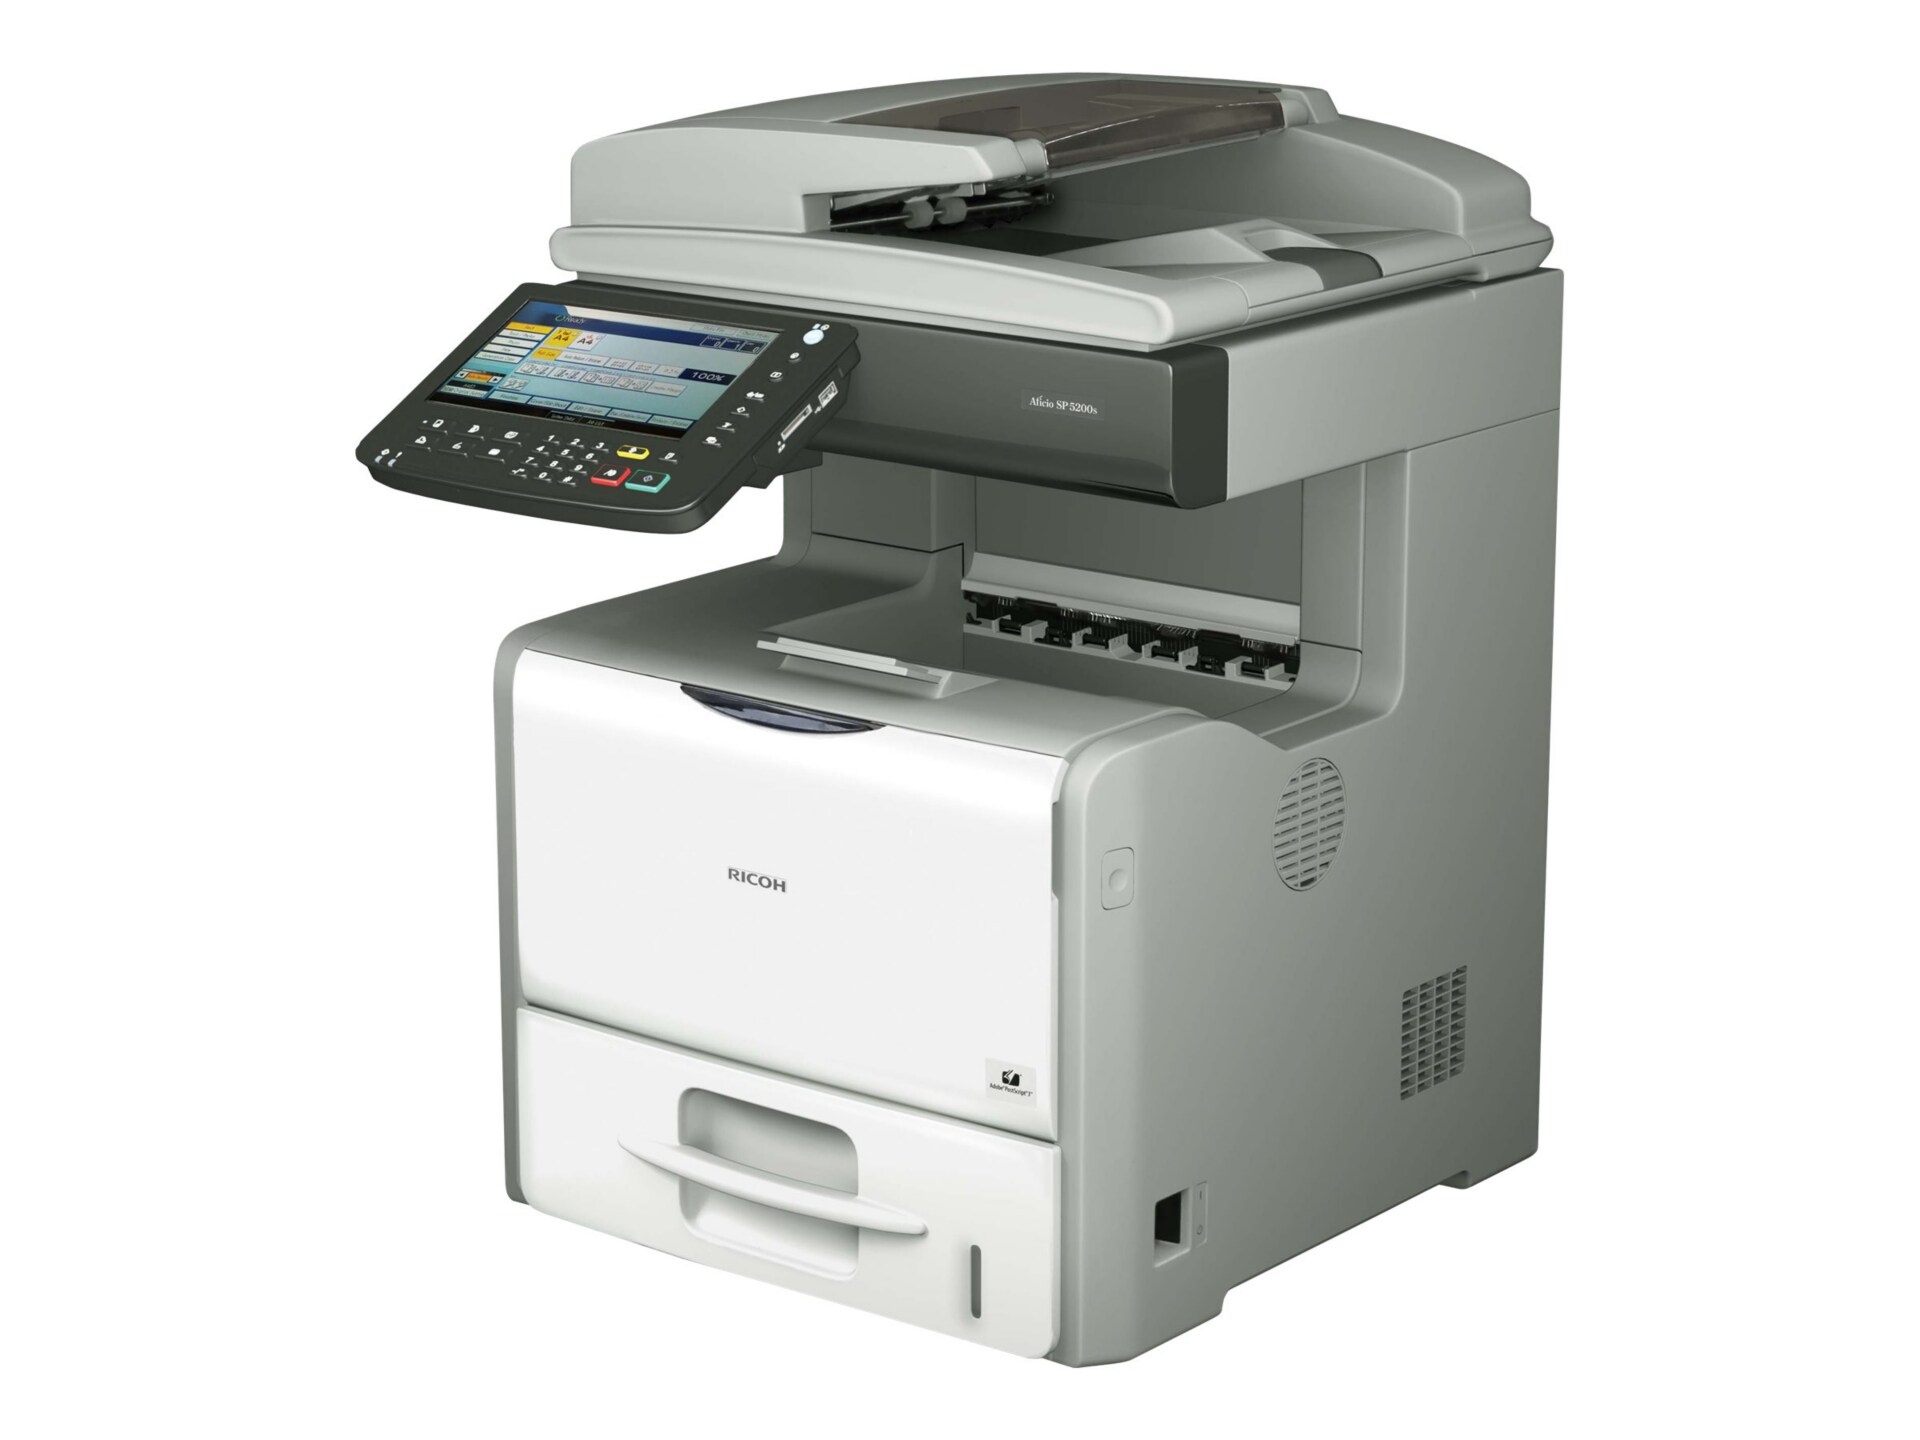 Ricoh Aficio SP 5200S 47 ppm Monochrome Multi-Function Printer